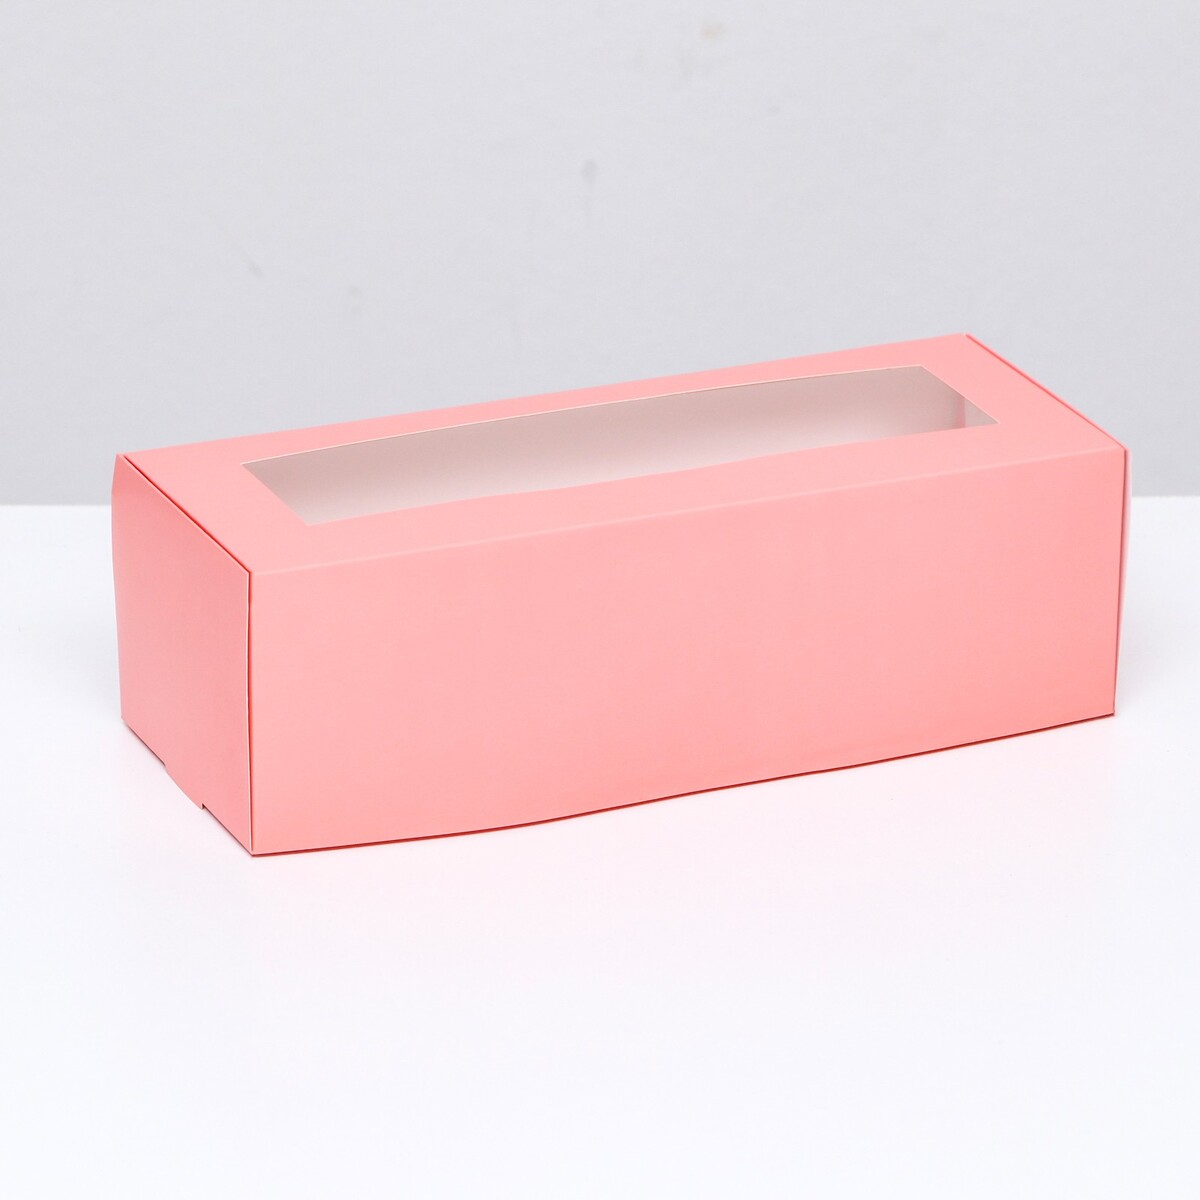 Коробка складная с окном под рулет, розовая, 26 х 10 х 8 см коробка складная розовая 17 х 25 см